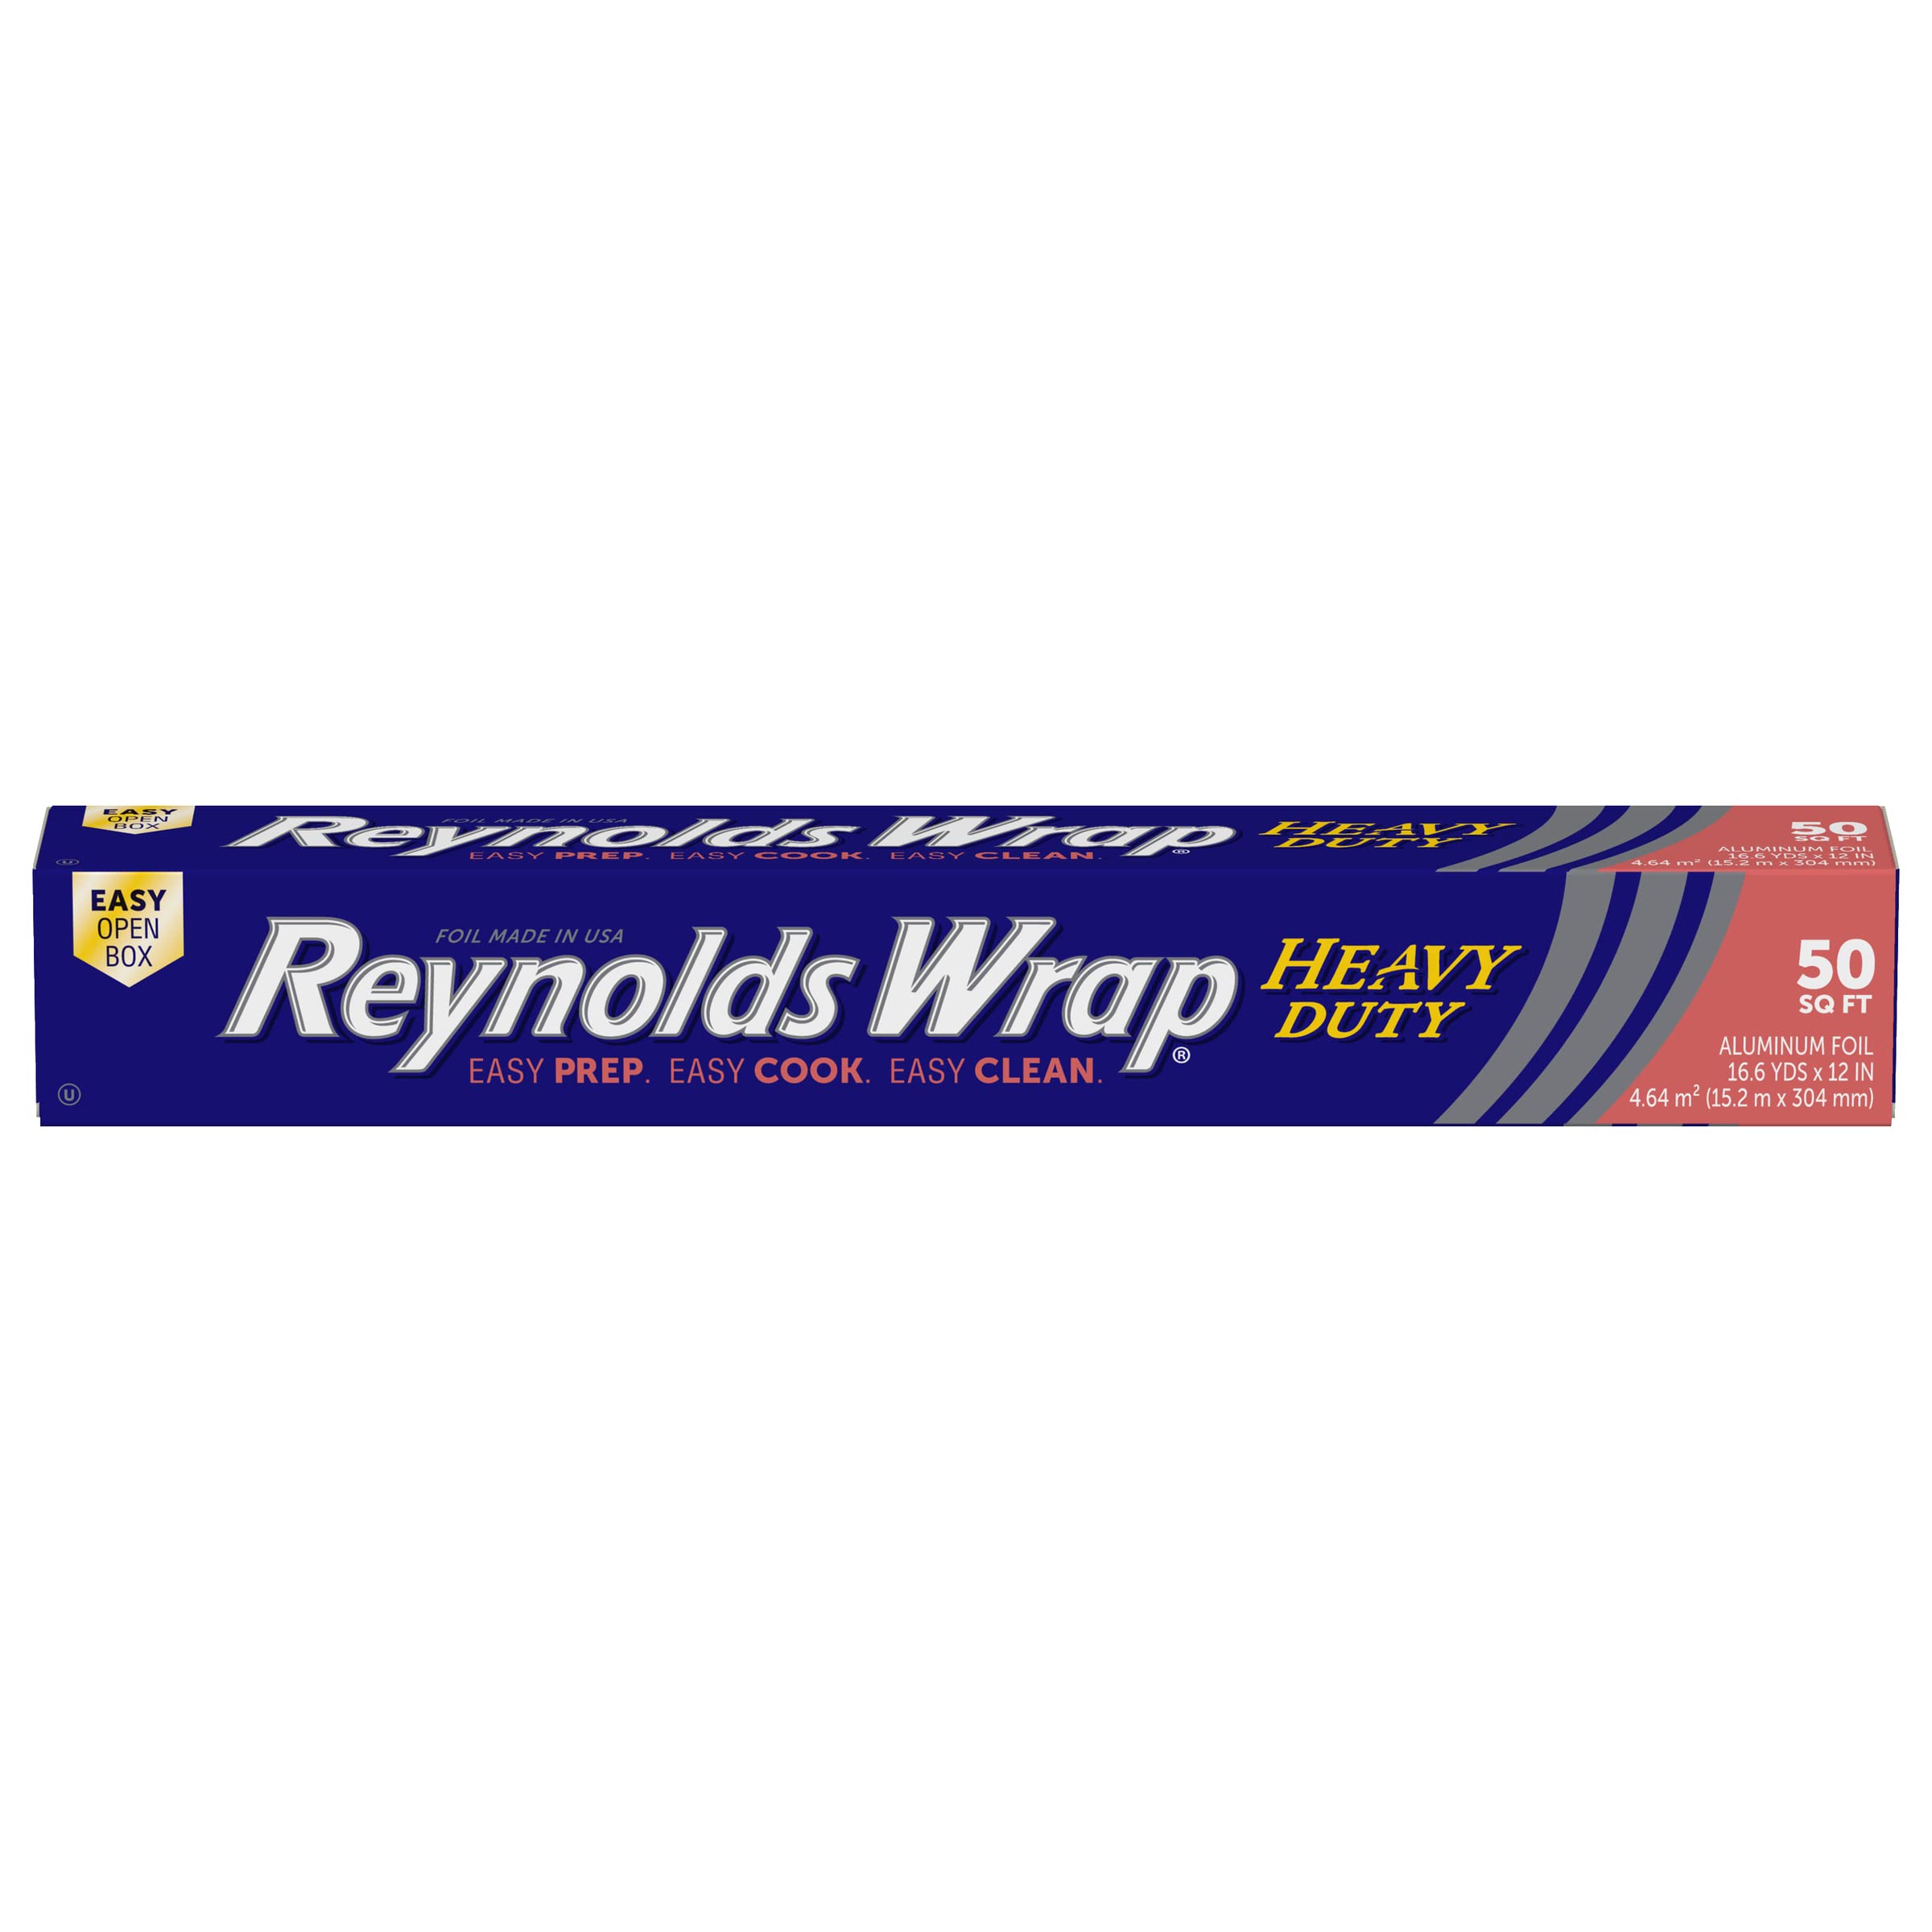 50-Sq Ft. Reynolds Wrap Heavy Duty Aluminum Foil $3.37 w/ S&S + Free S&H w/ Prime or $25+